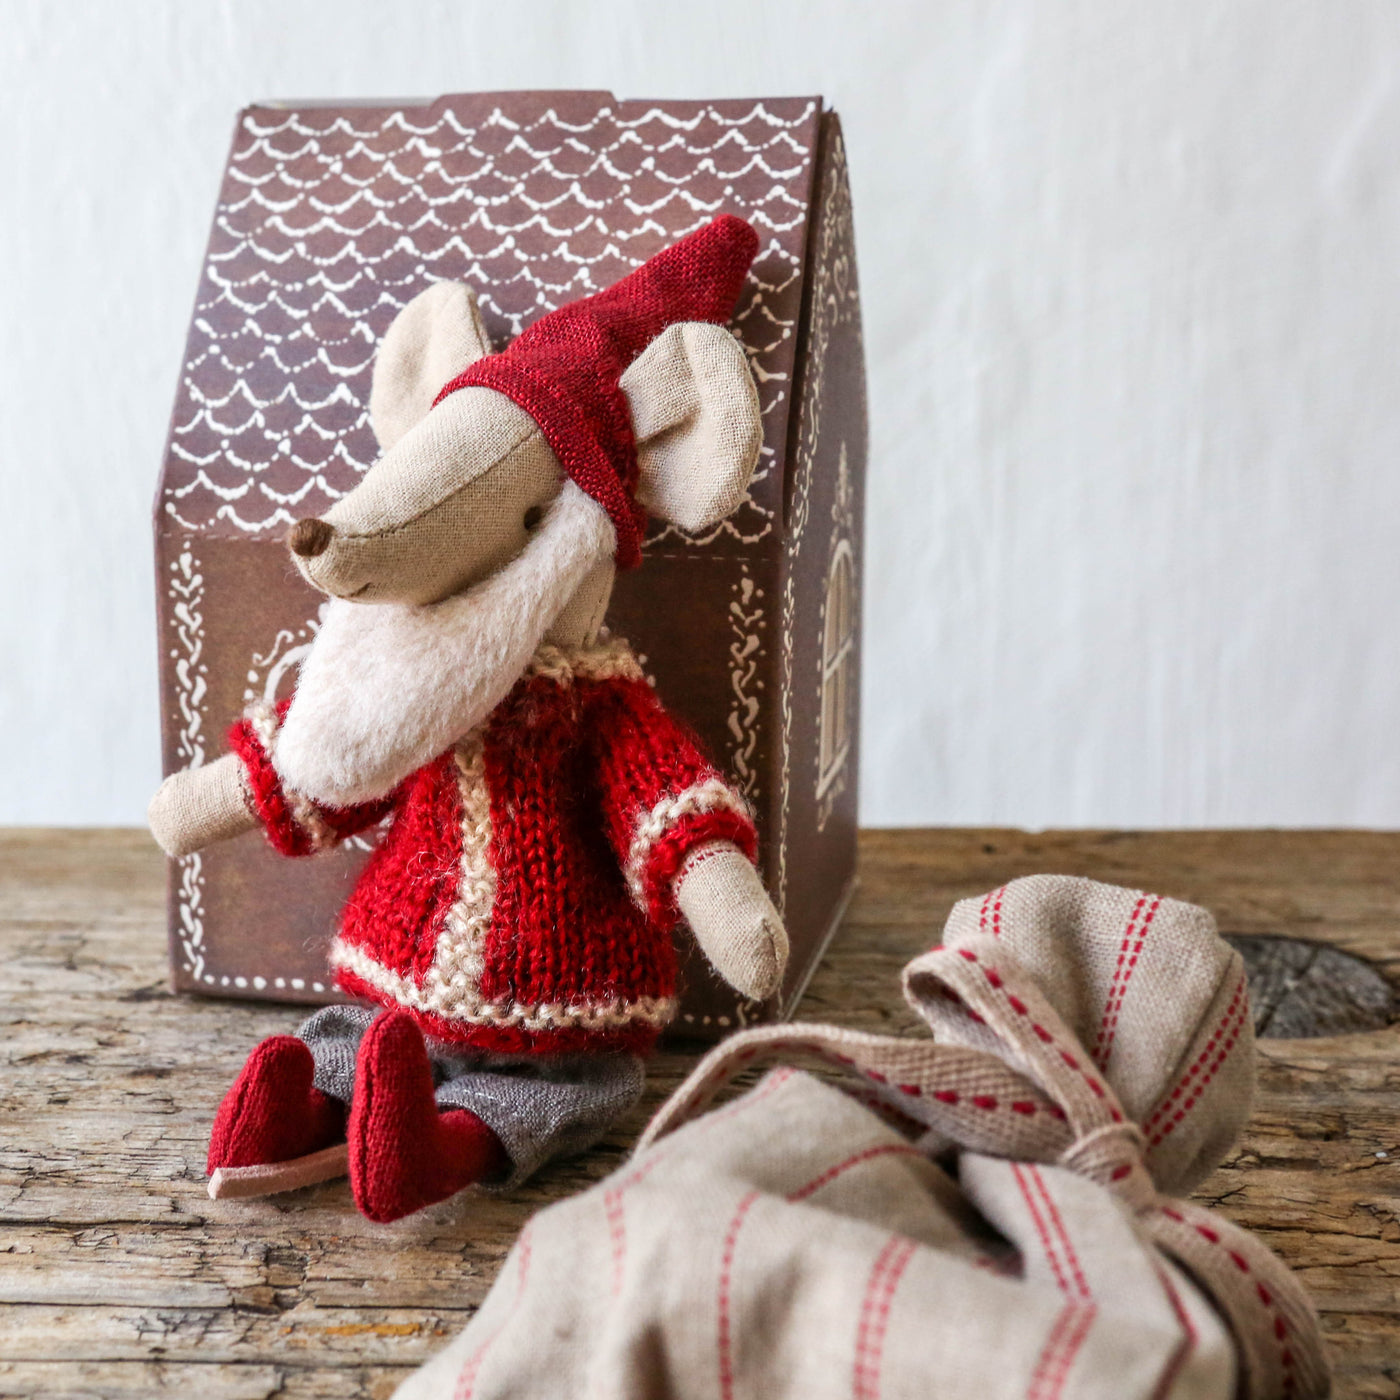 Santa Mouse in Housebox